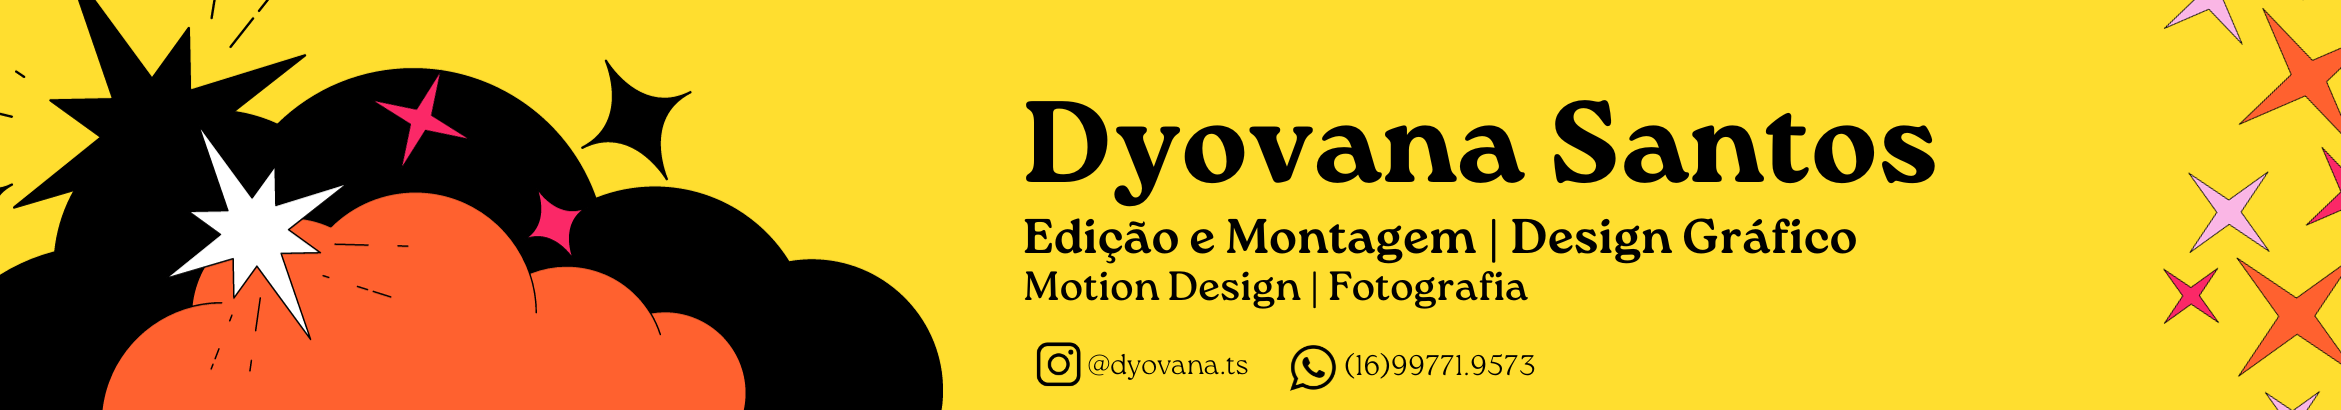 Dyovana Santos's profile banner